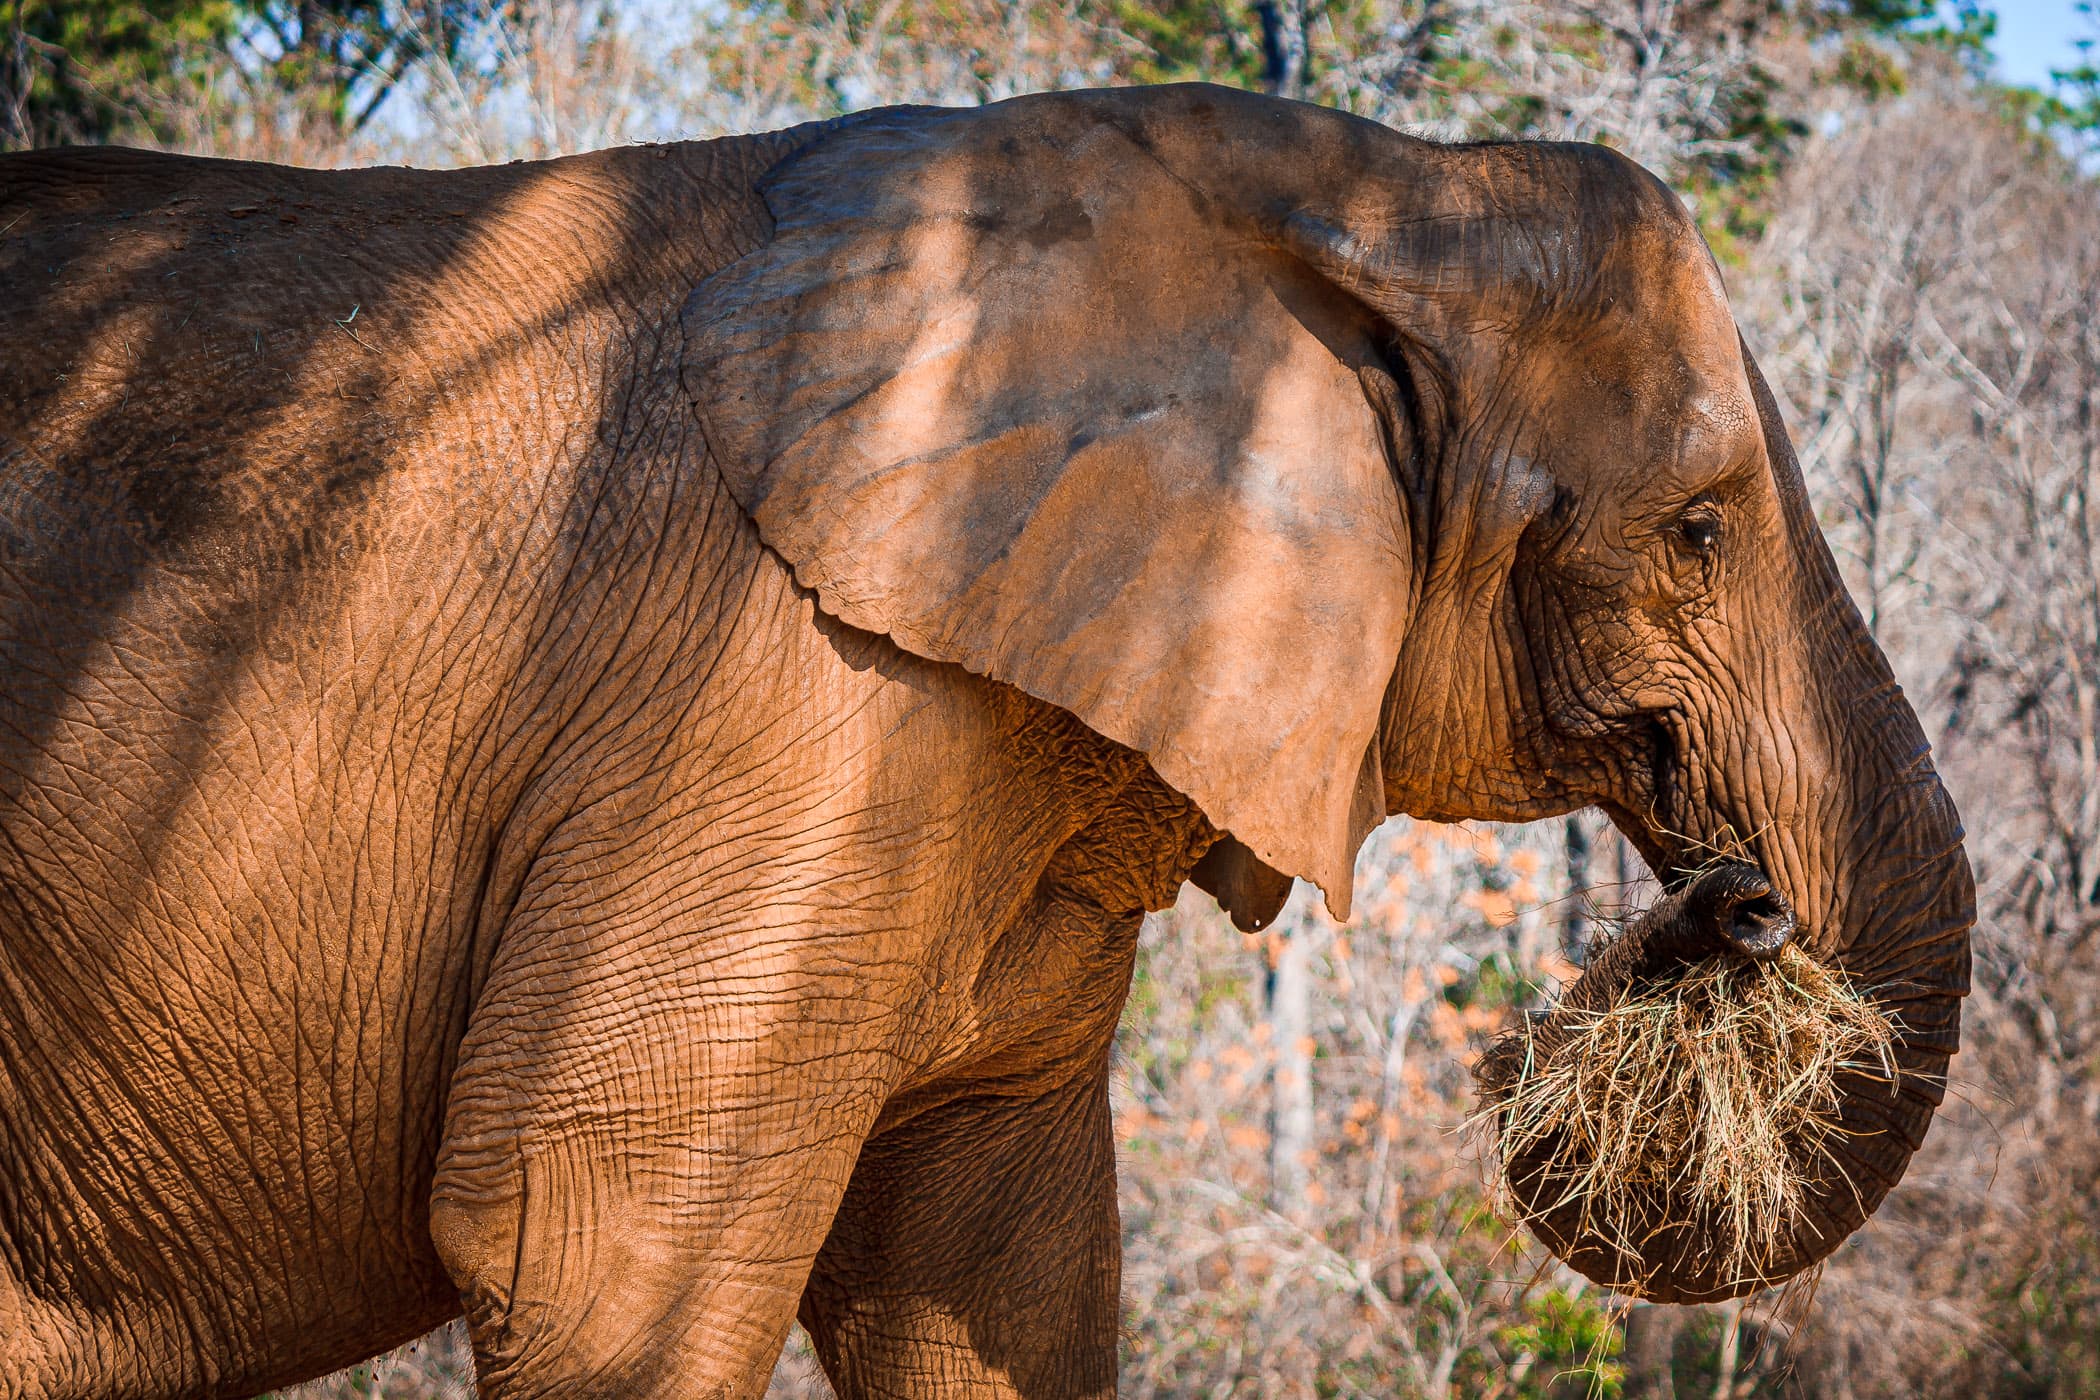 An elephant at Tyler, Texas' Caldwell Zoo enjoys a snack of hay.